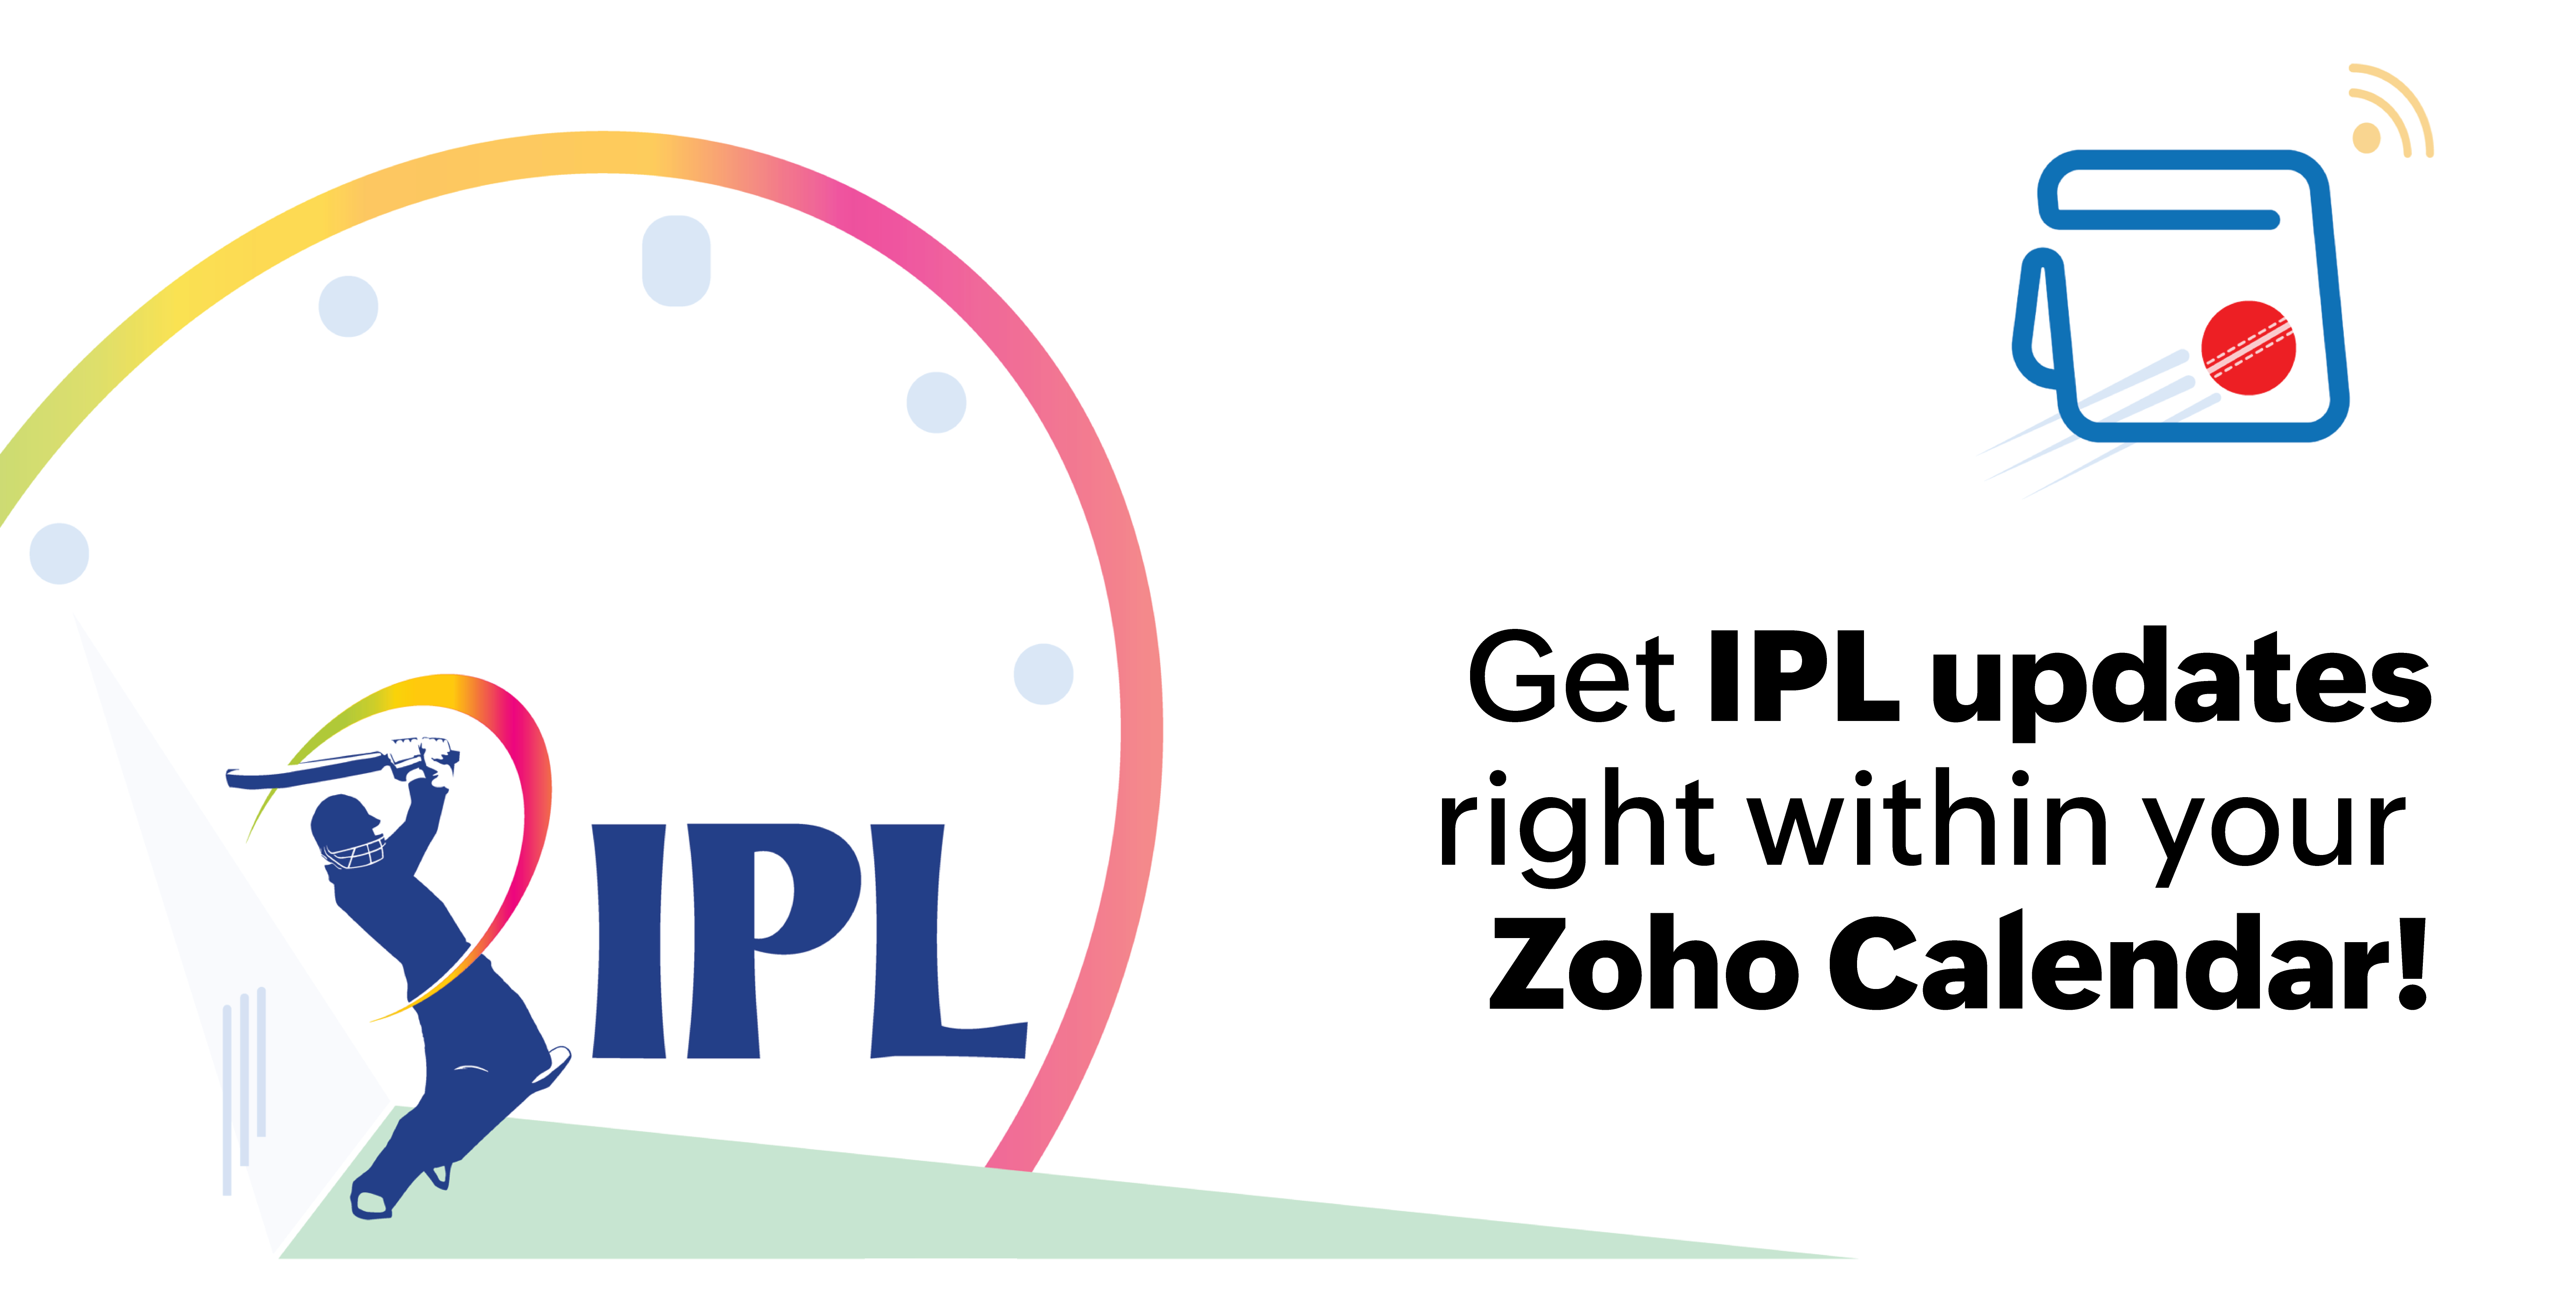 Re-kindle the IPL enthusiasm with Zoho Calendar!